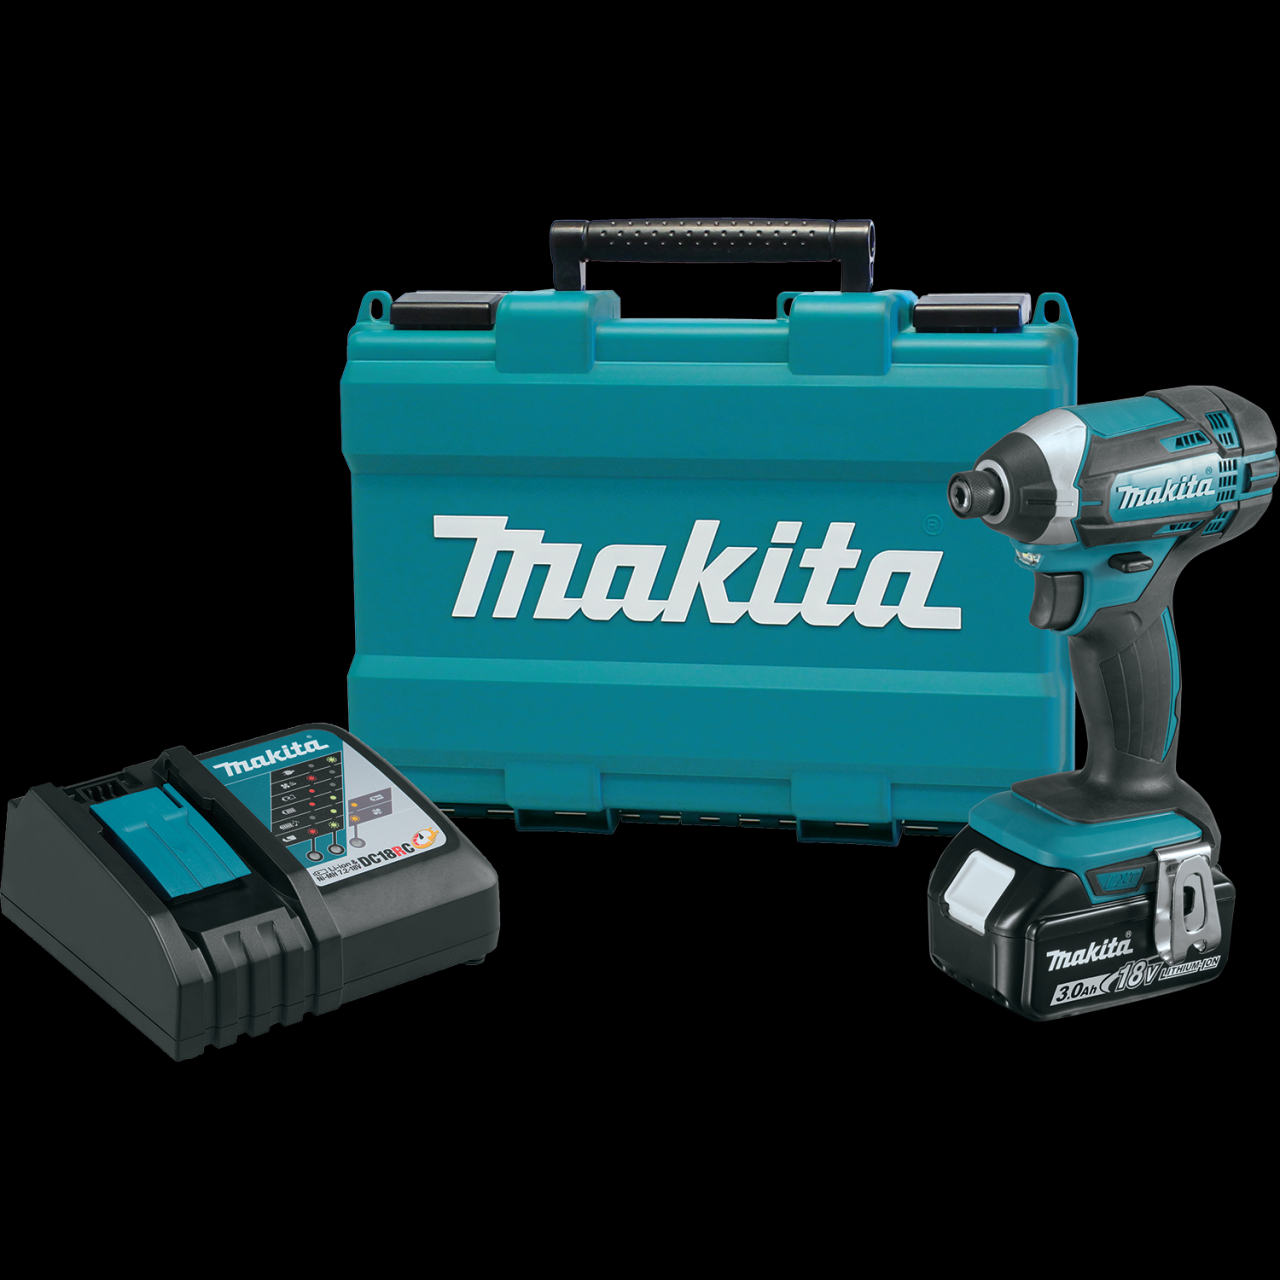 Makita USA - Product Details -XDT111